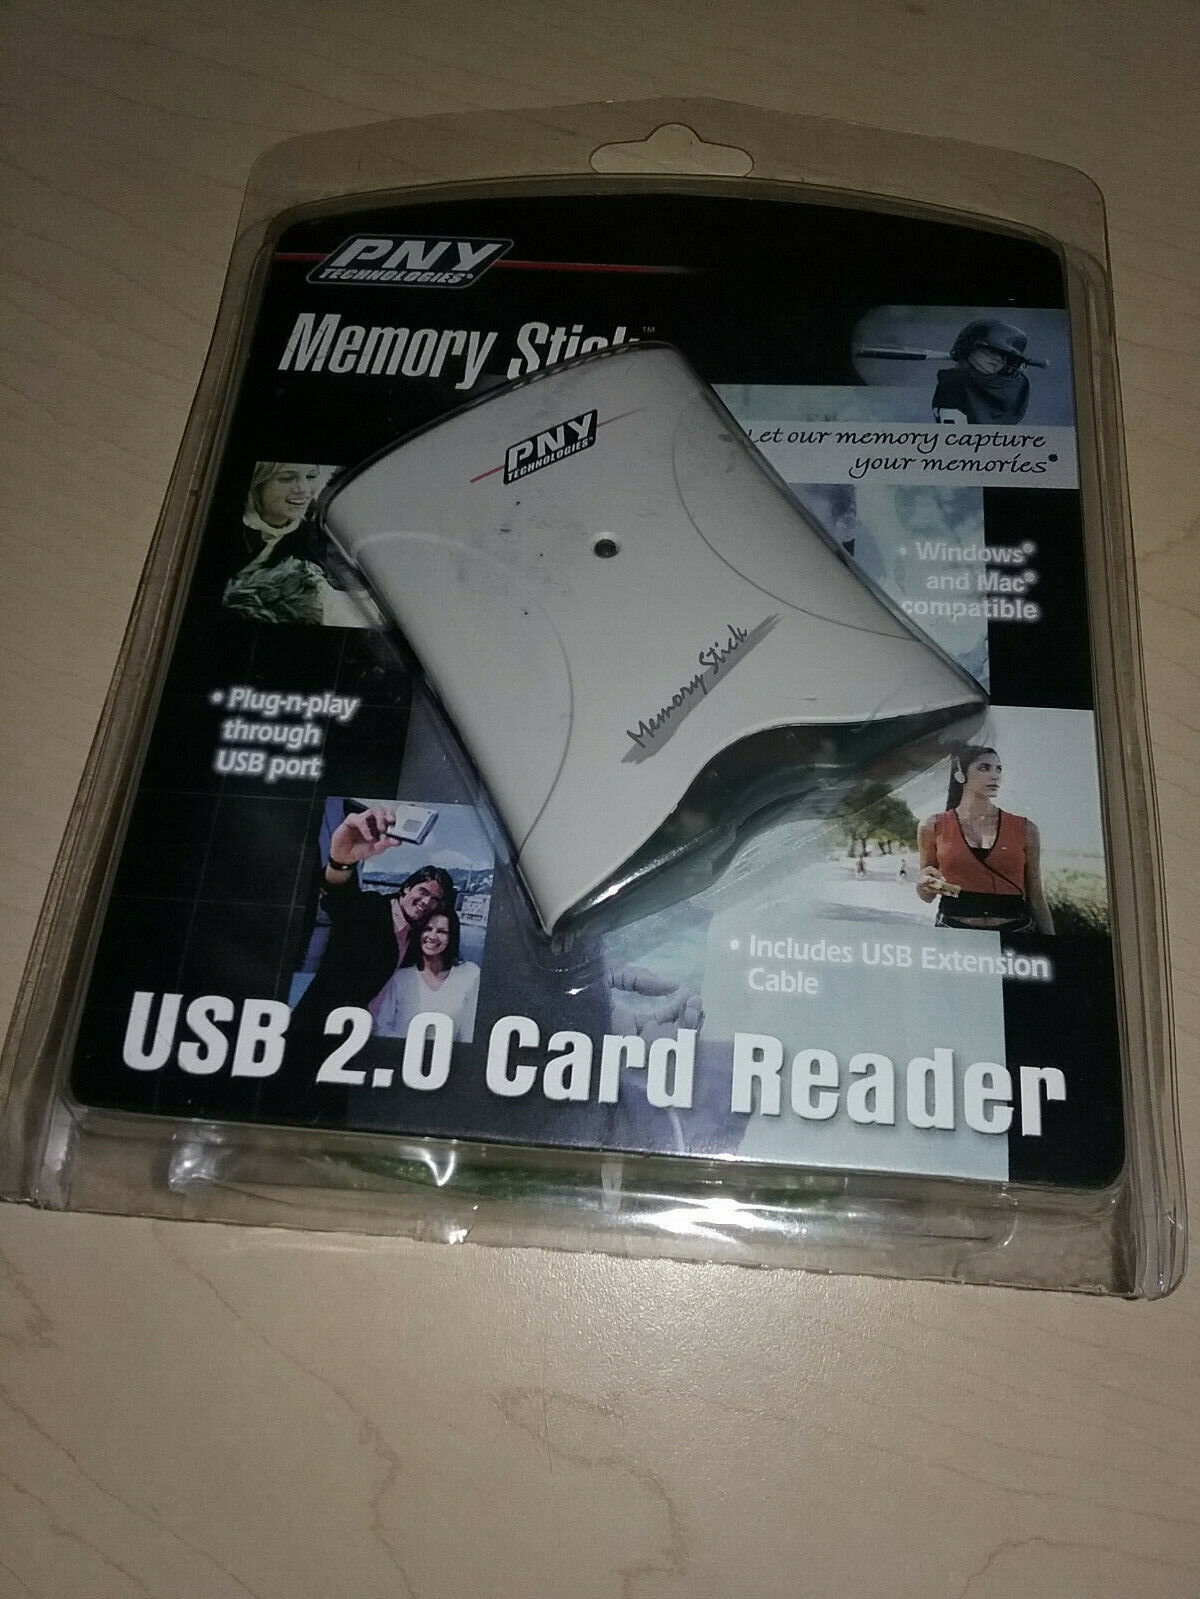  PNY MEMORY STICK SINGLE SLOT with USB 2. Card/Plug & Play Compatible Window-Mac